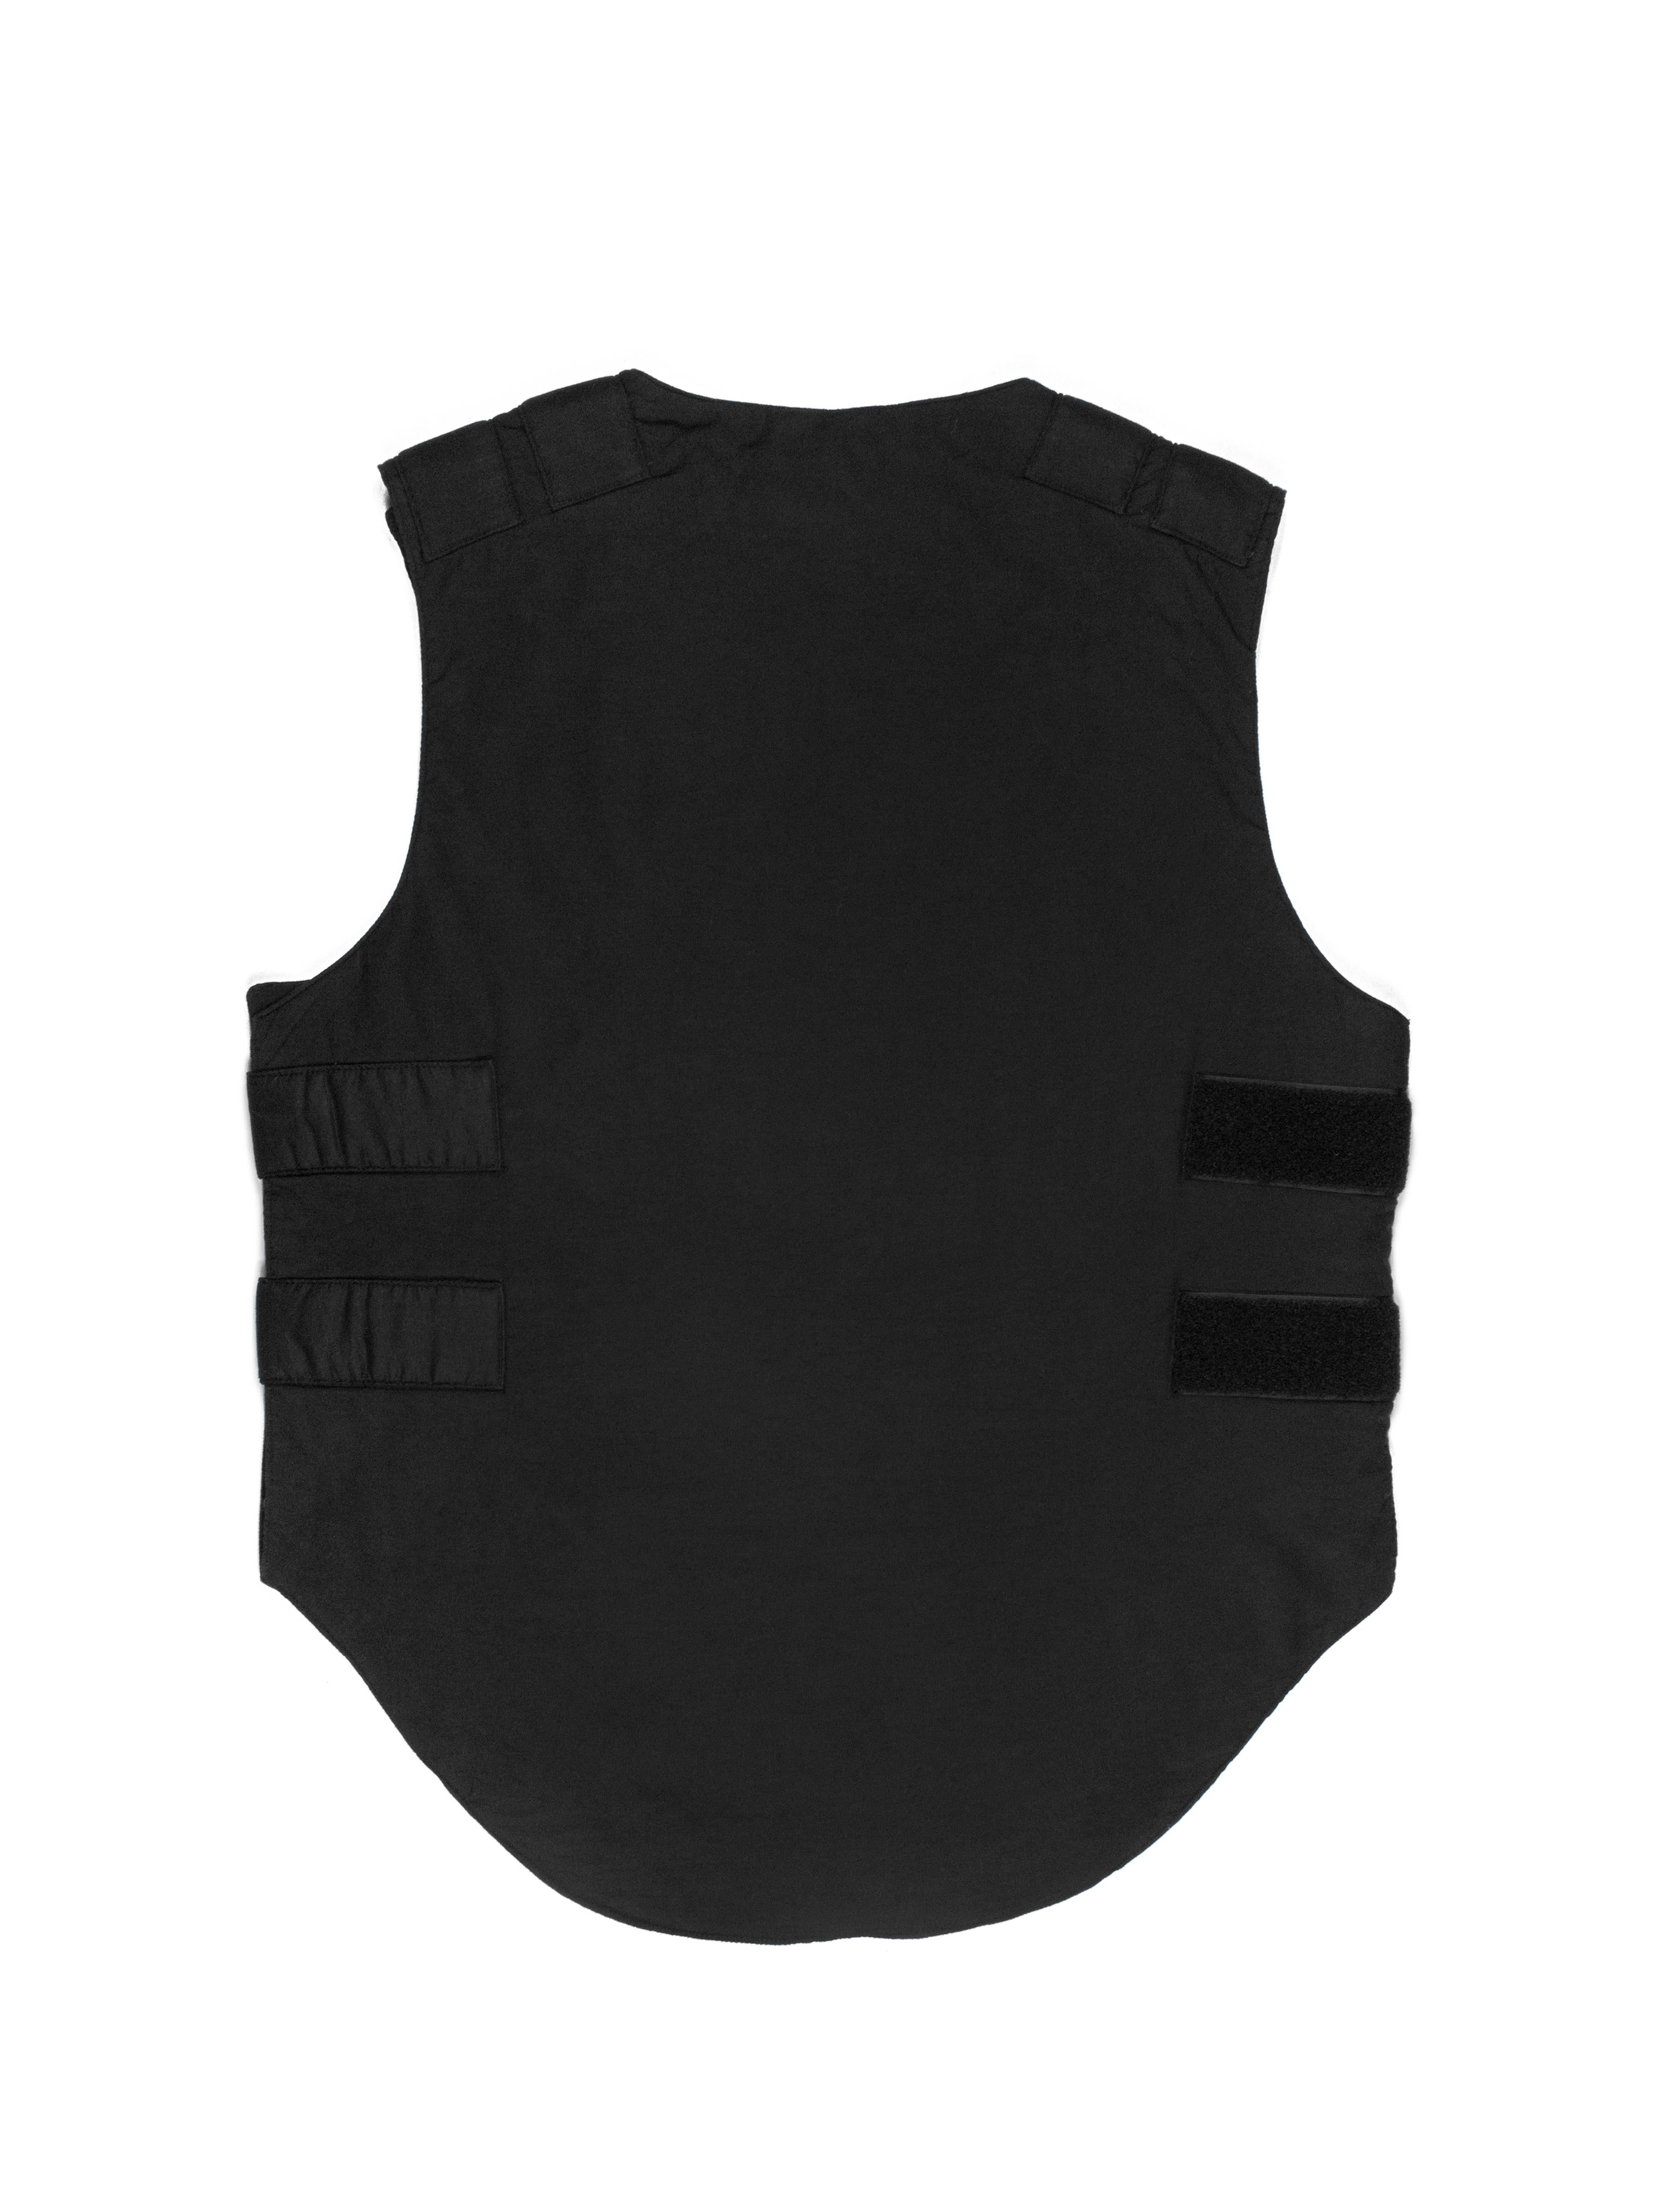 helmut lang bullet proof vest